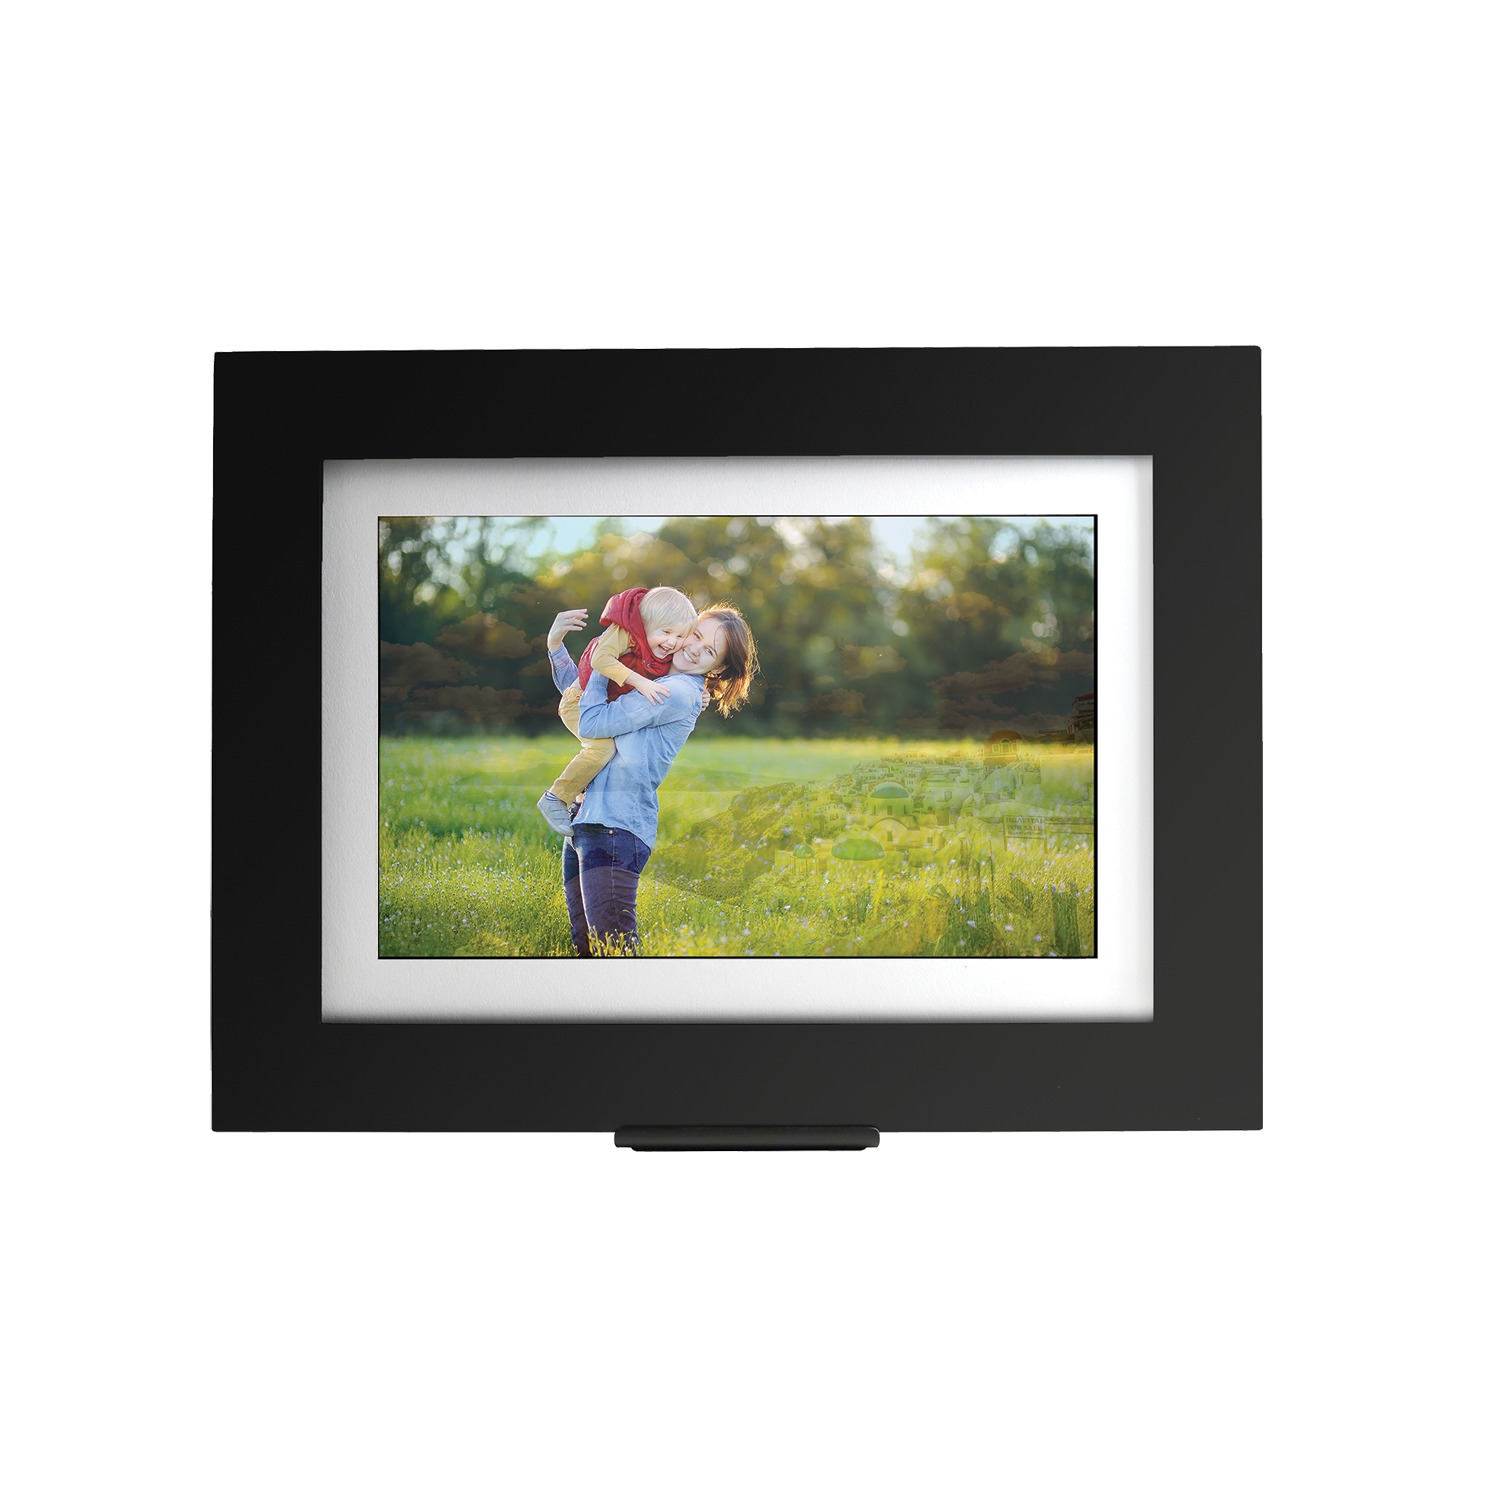 Brookstone PhotoShare 8" Smart Digital Picure Frame in Black - image 1 of 6